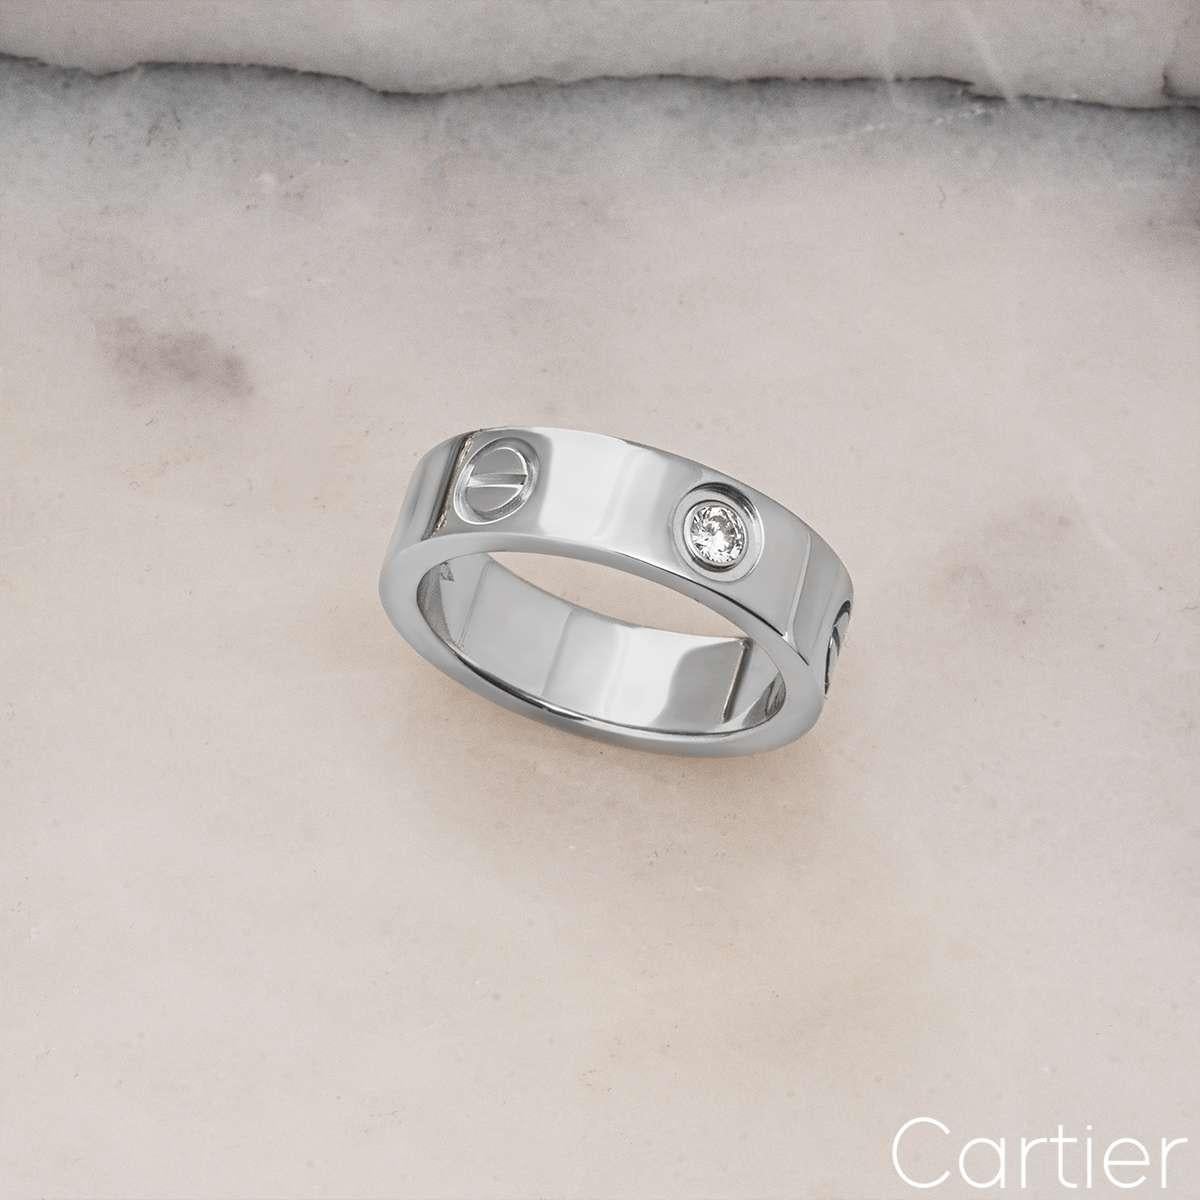 Cartier Platinum Diamond Love Ring Size 51 B4046700 For Sale 1